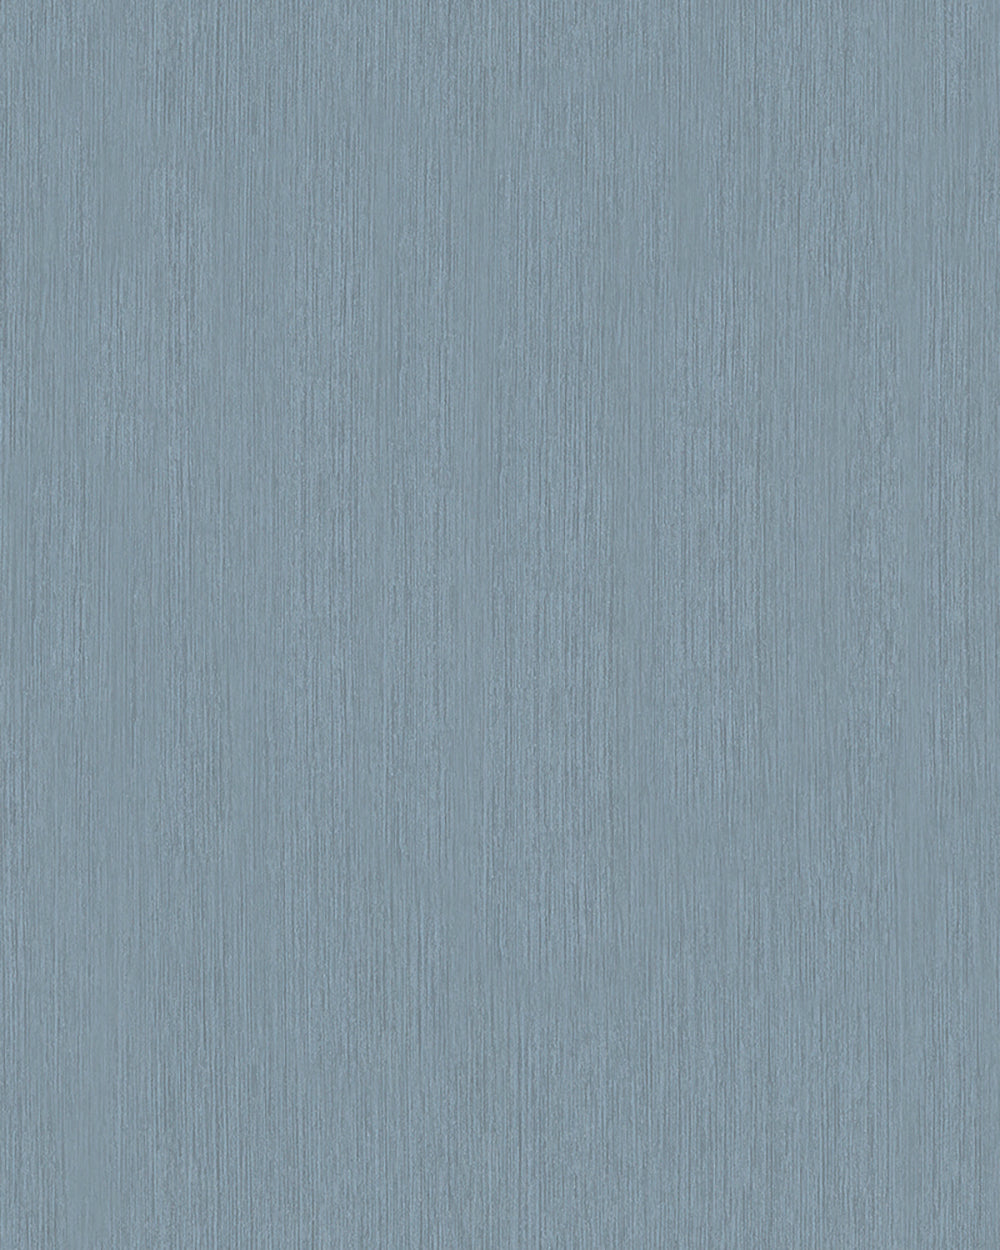 Modernista - Textured Plain plain wallpaper Marburg Roll Blue  32270